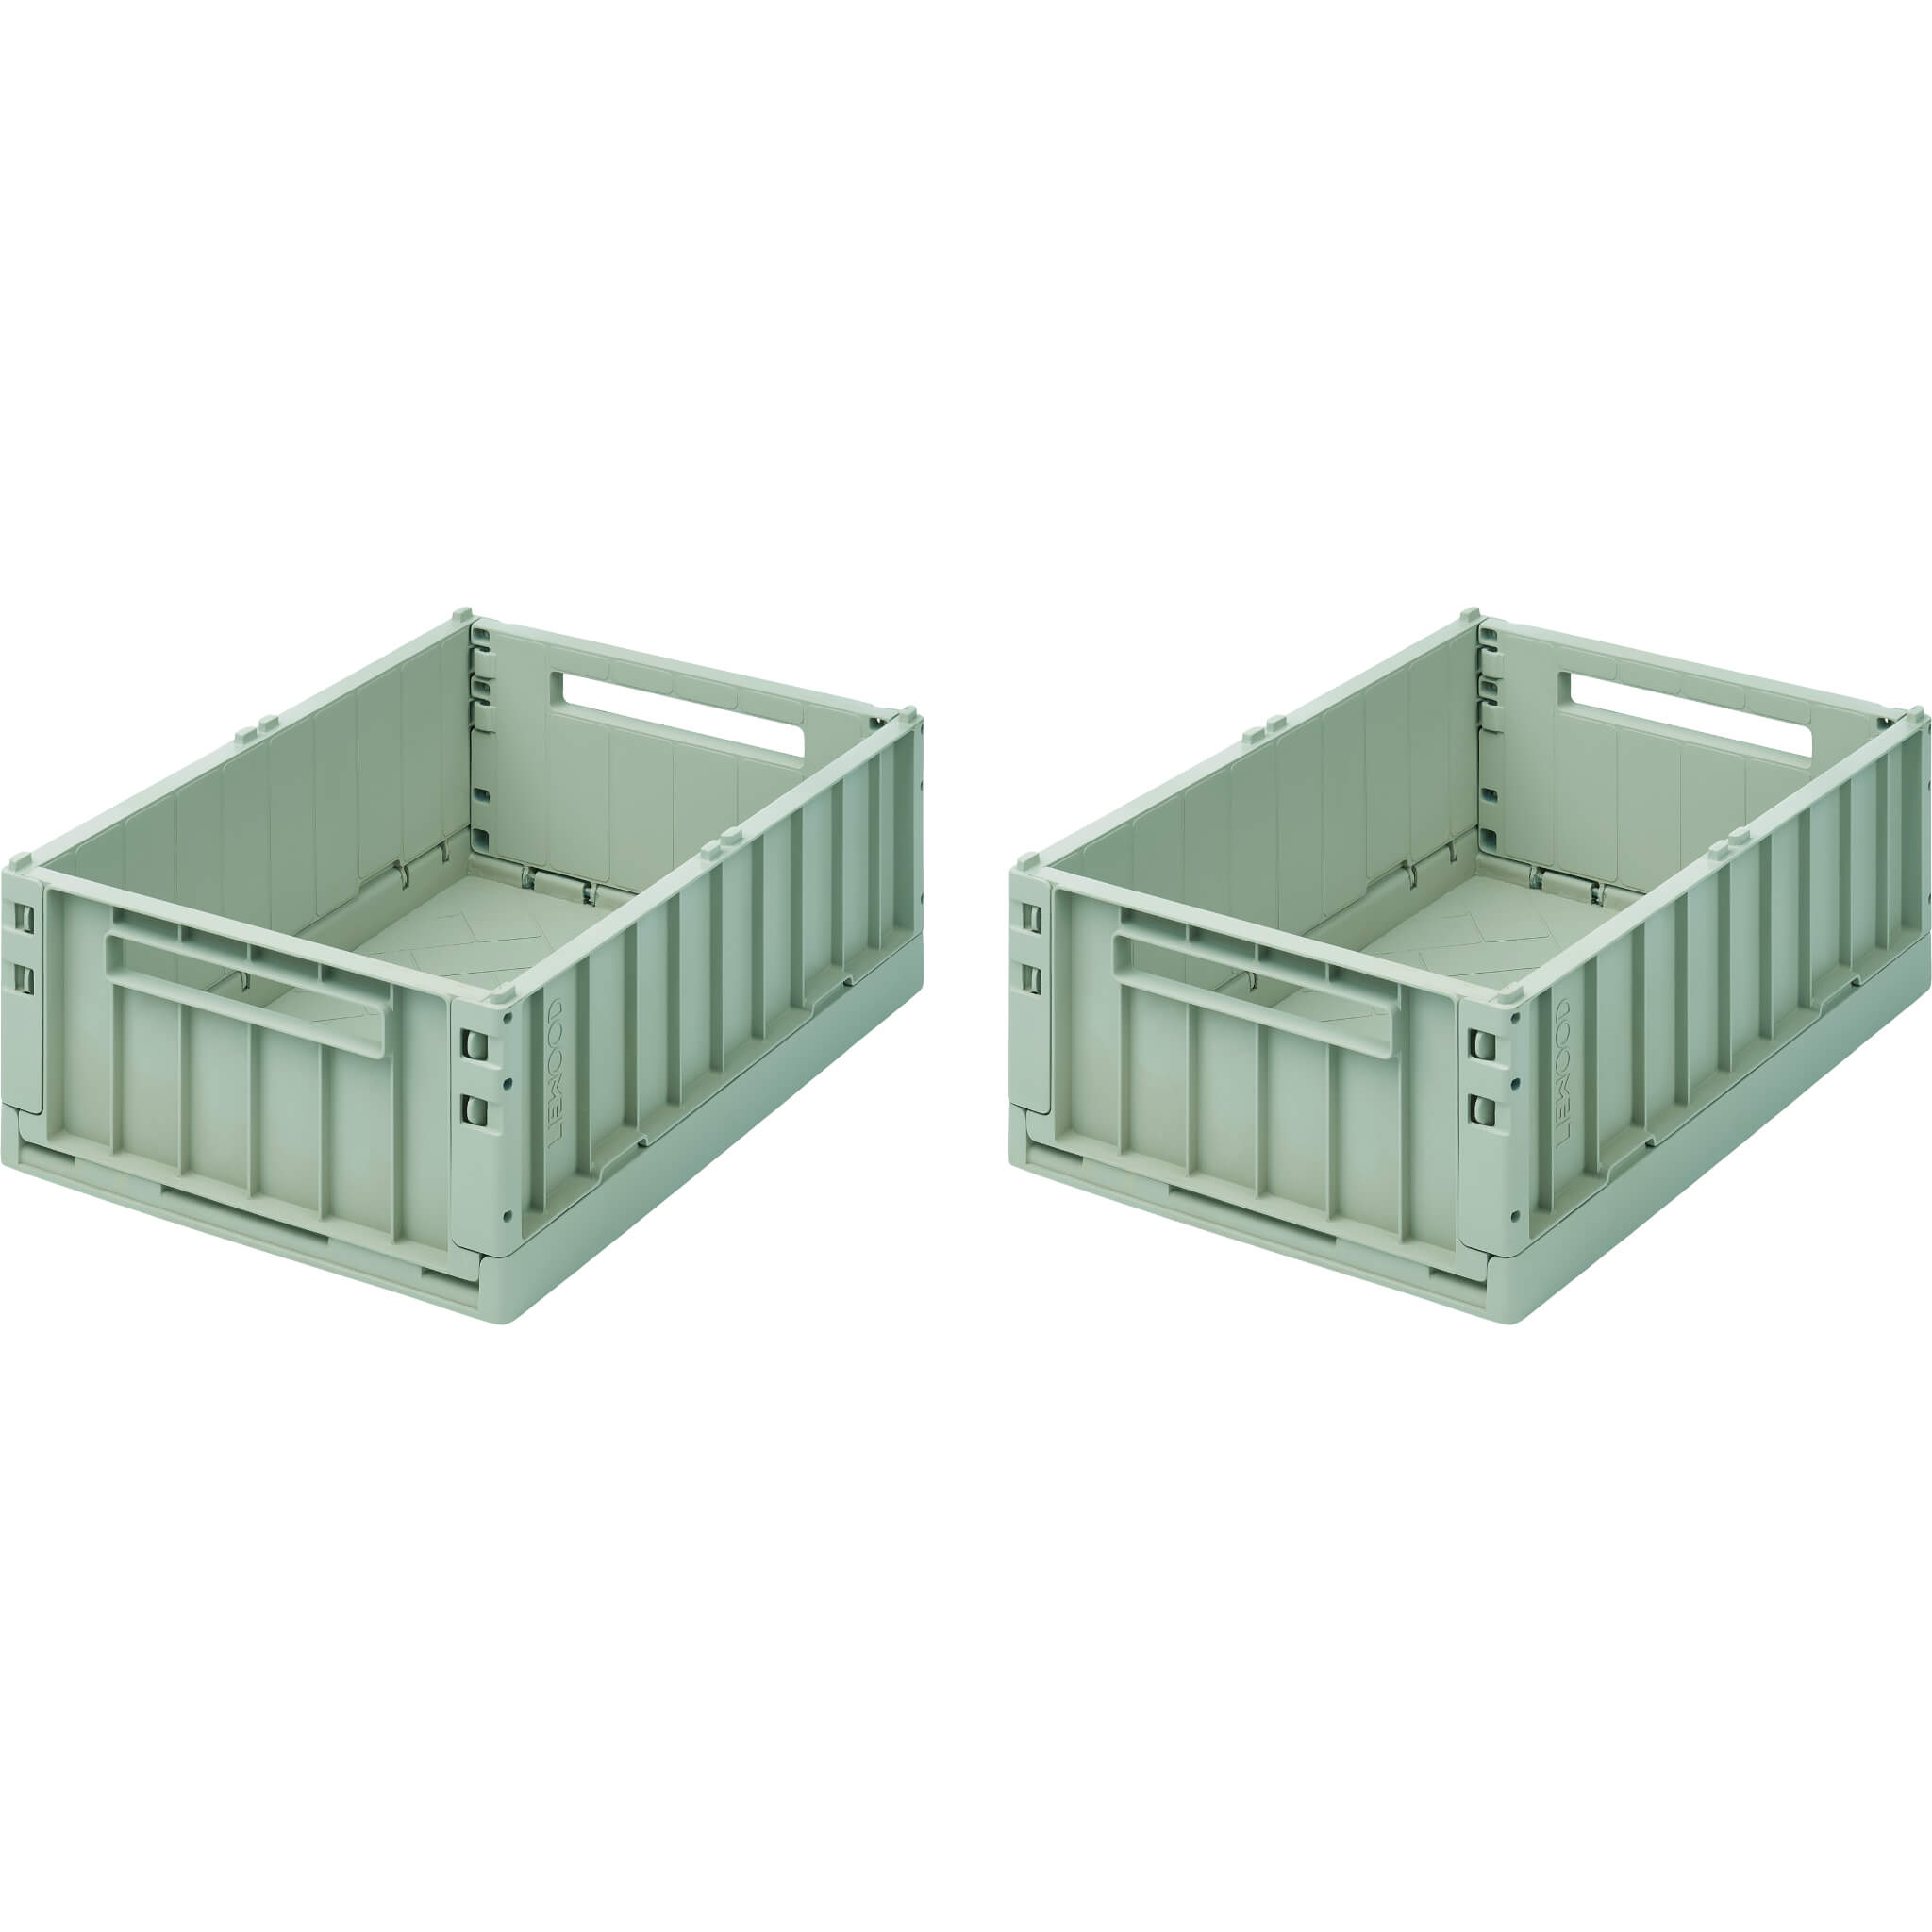 Weston Storage Folding Box - Peppermint - Medium (2 pack)